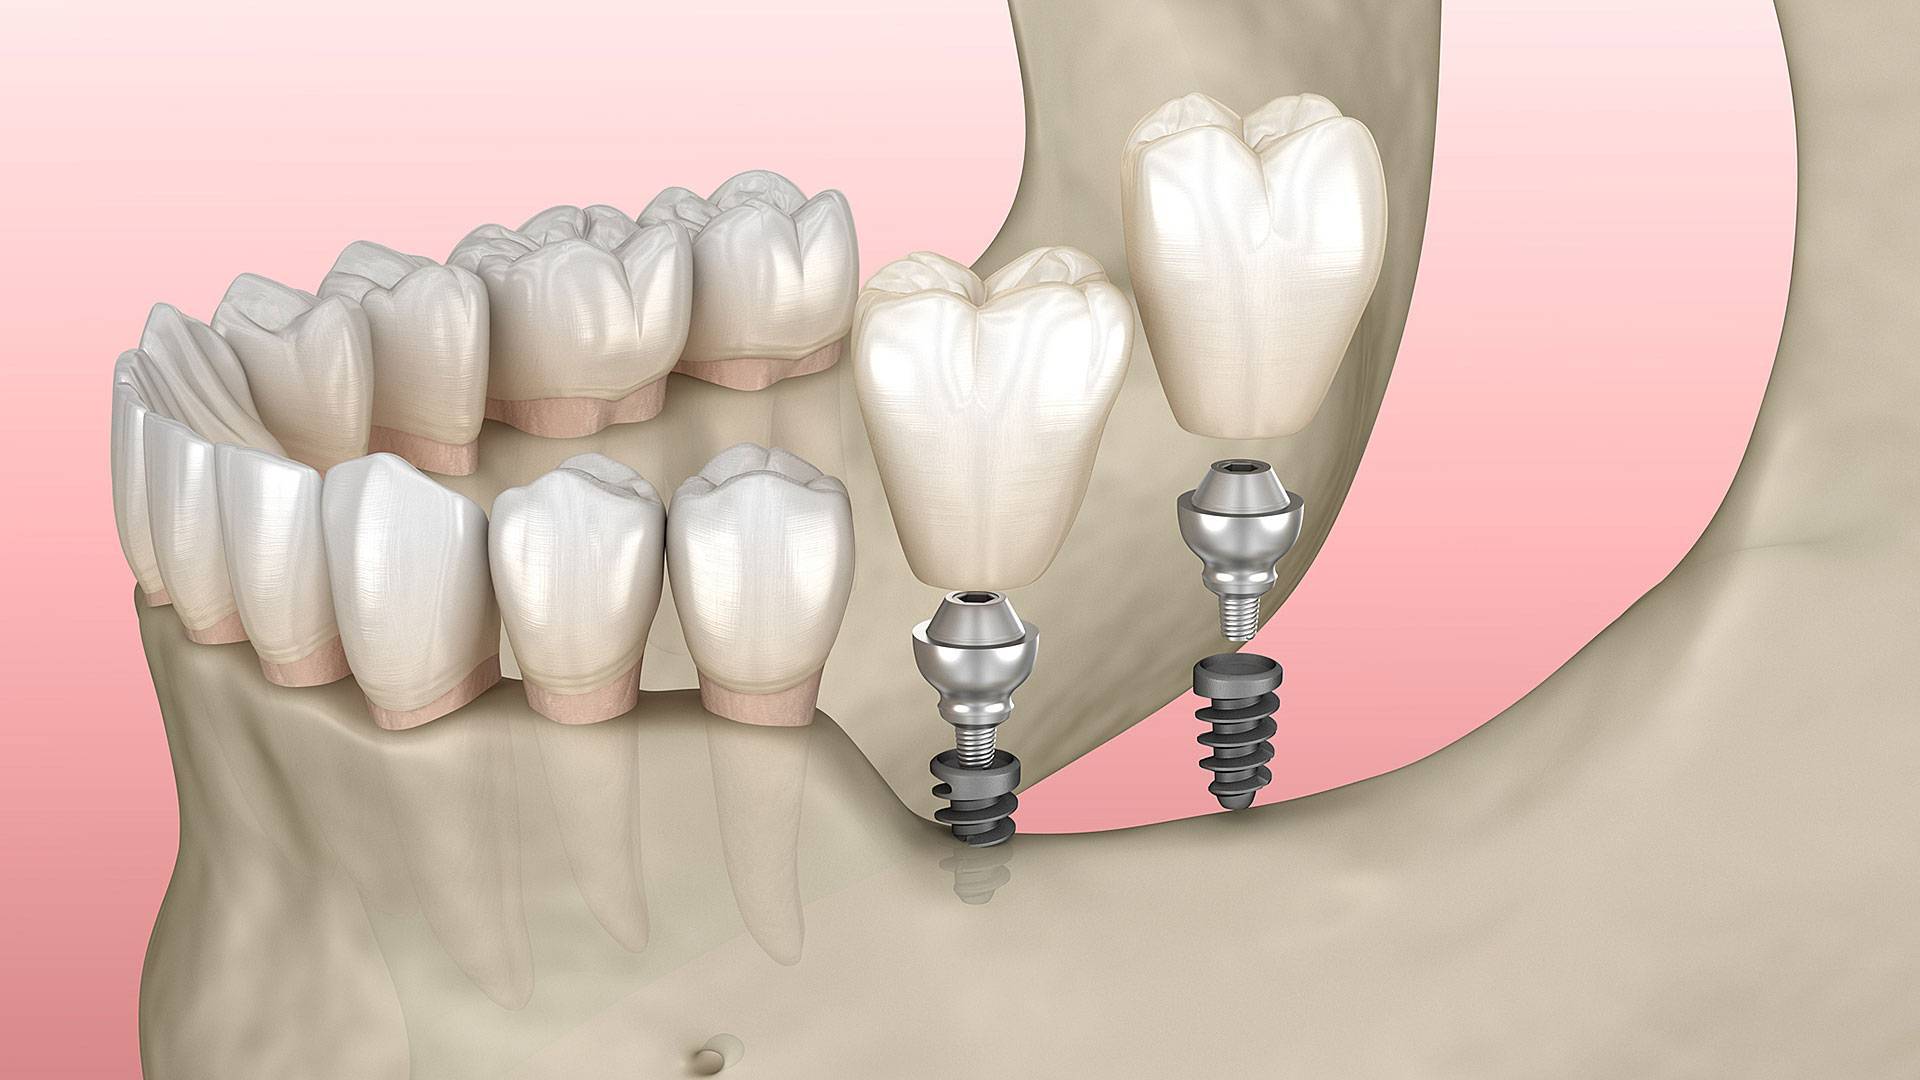 Mini Tooth Implants Vs. Traditional Dental Implants